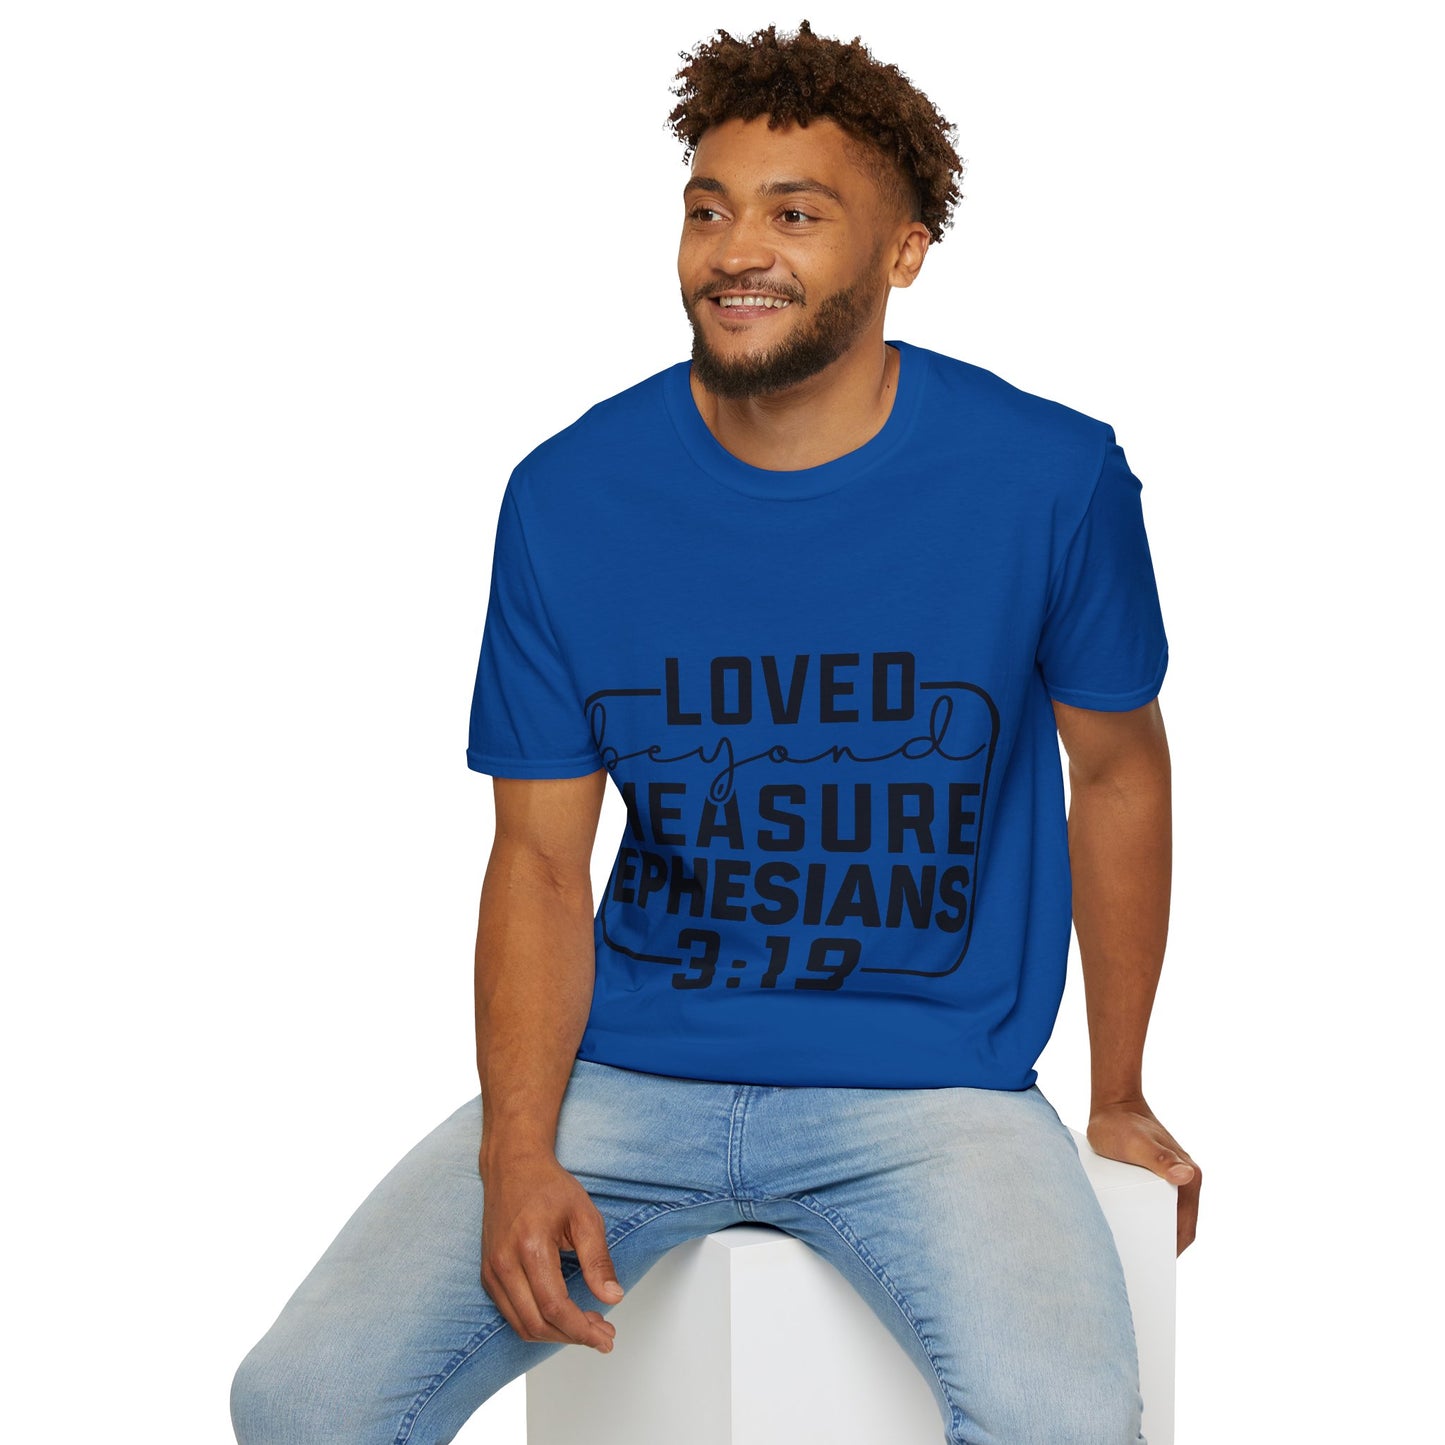 Loved Beyond Measure Ephesians 3:19 Triple Viking T-Shirt